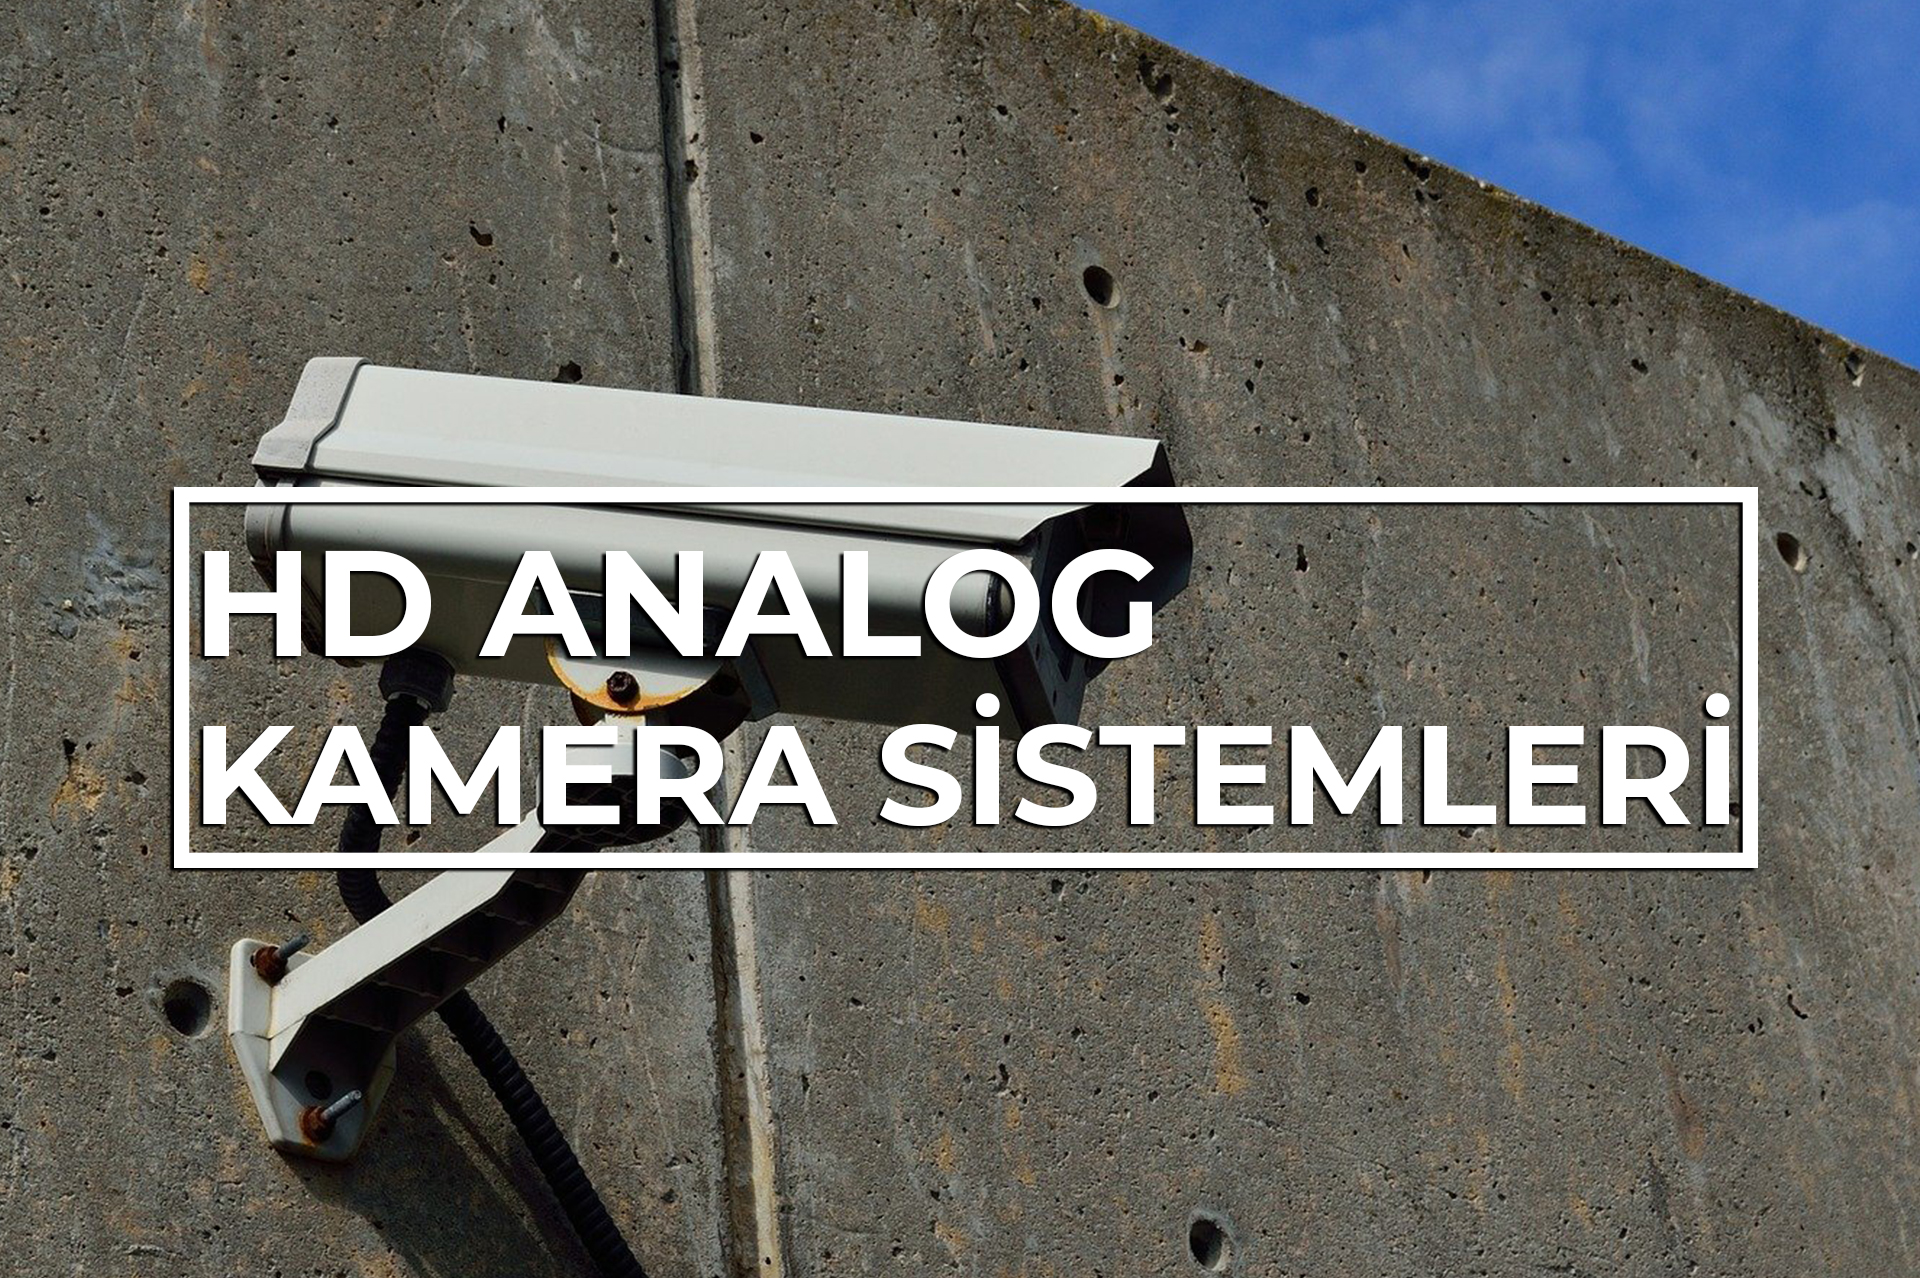 HD Analog Kamera Sistemleri